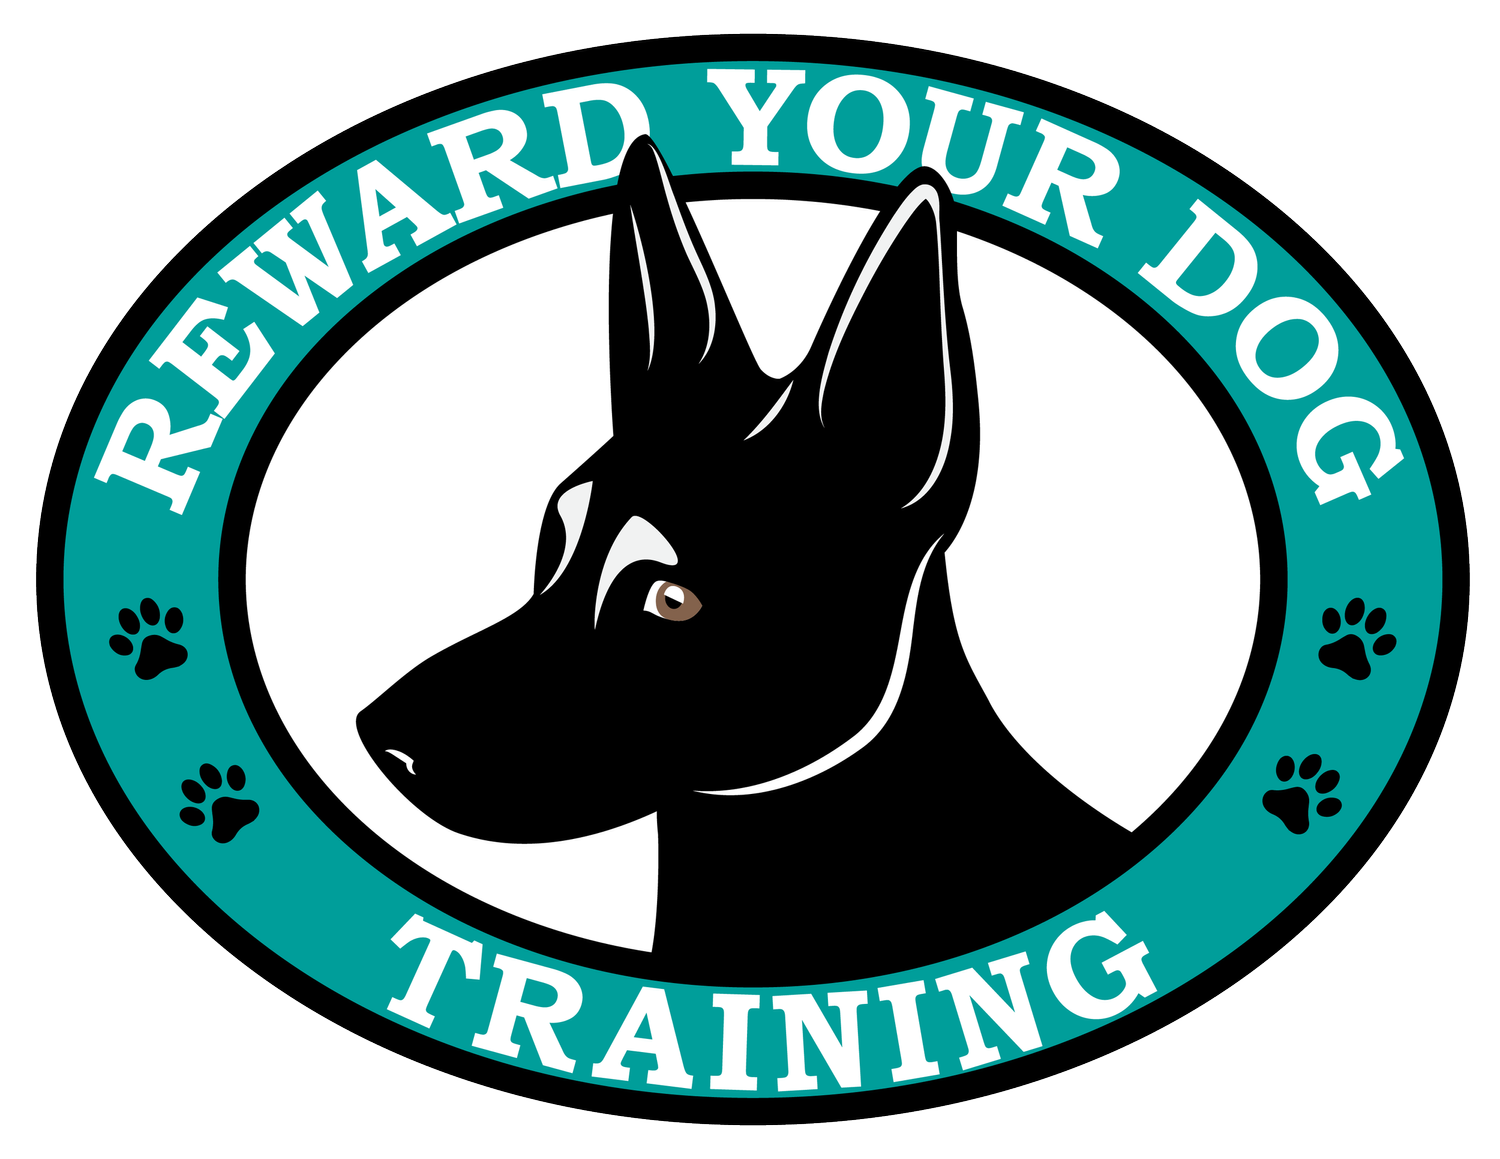 Reward Your Dog Training